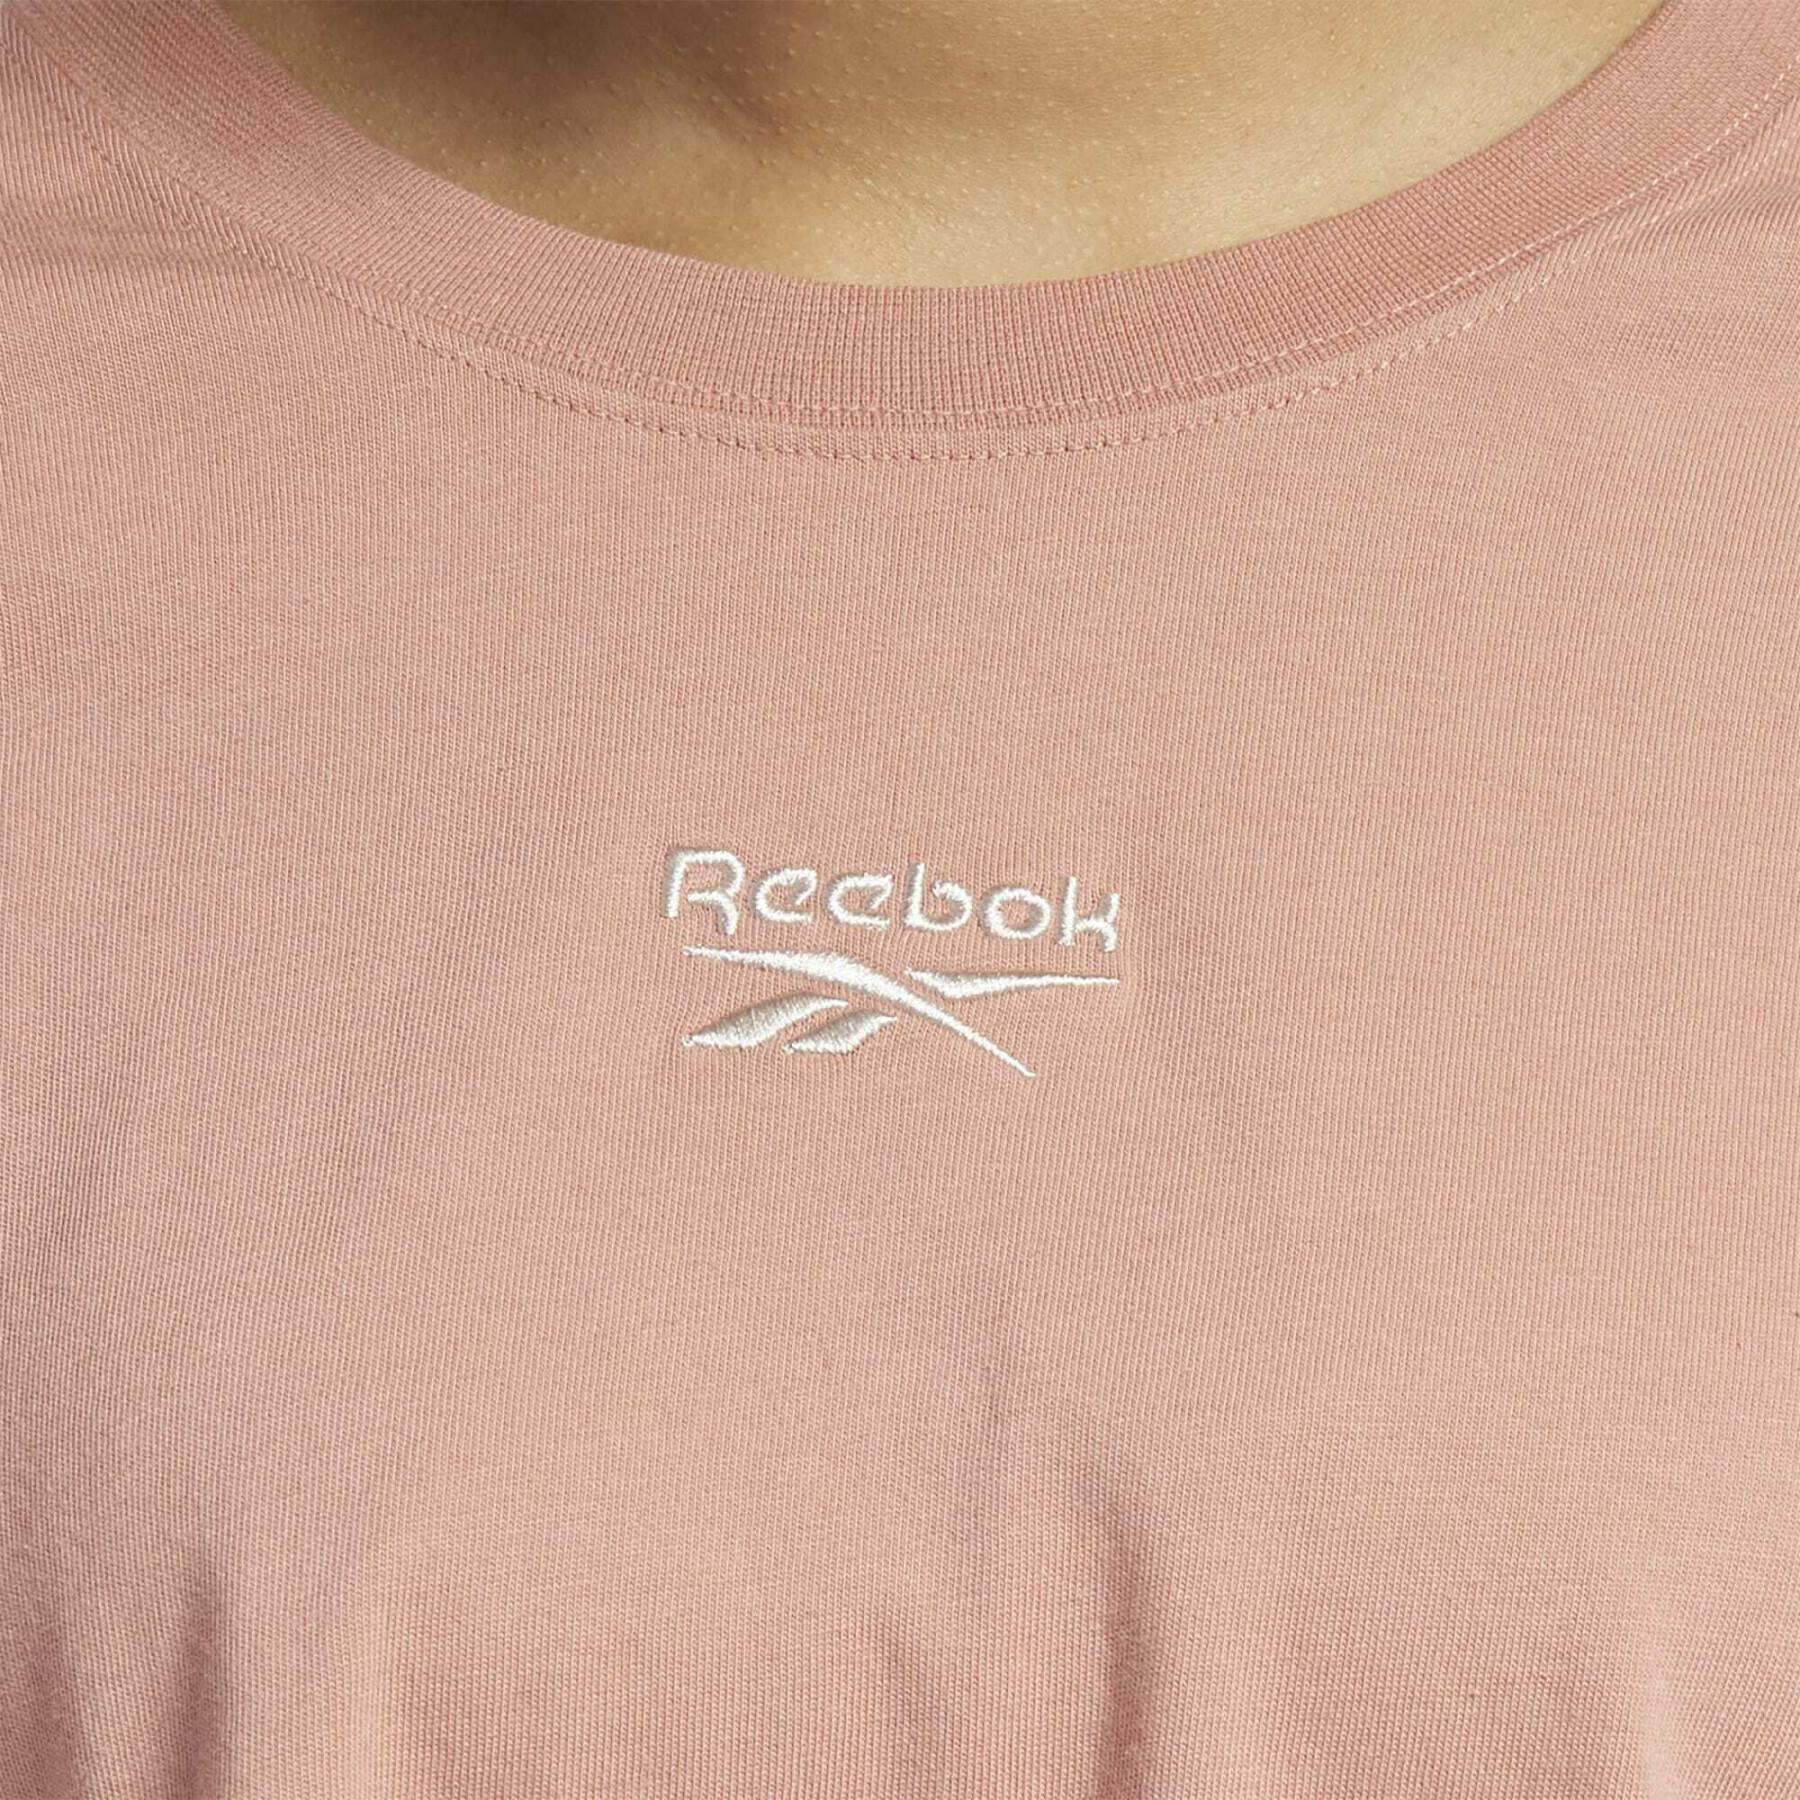 Camiseta de mujer Reebok